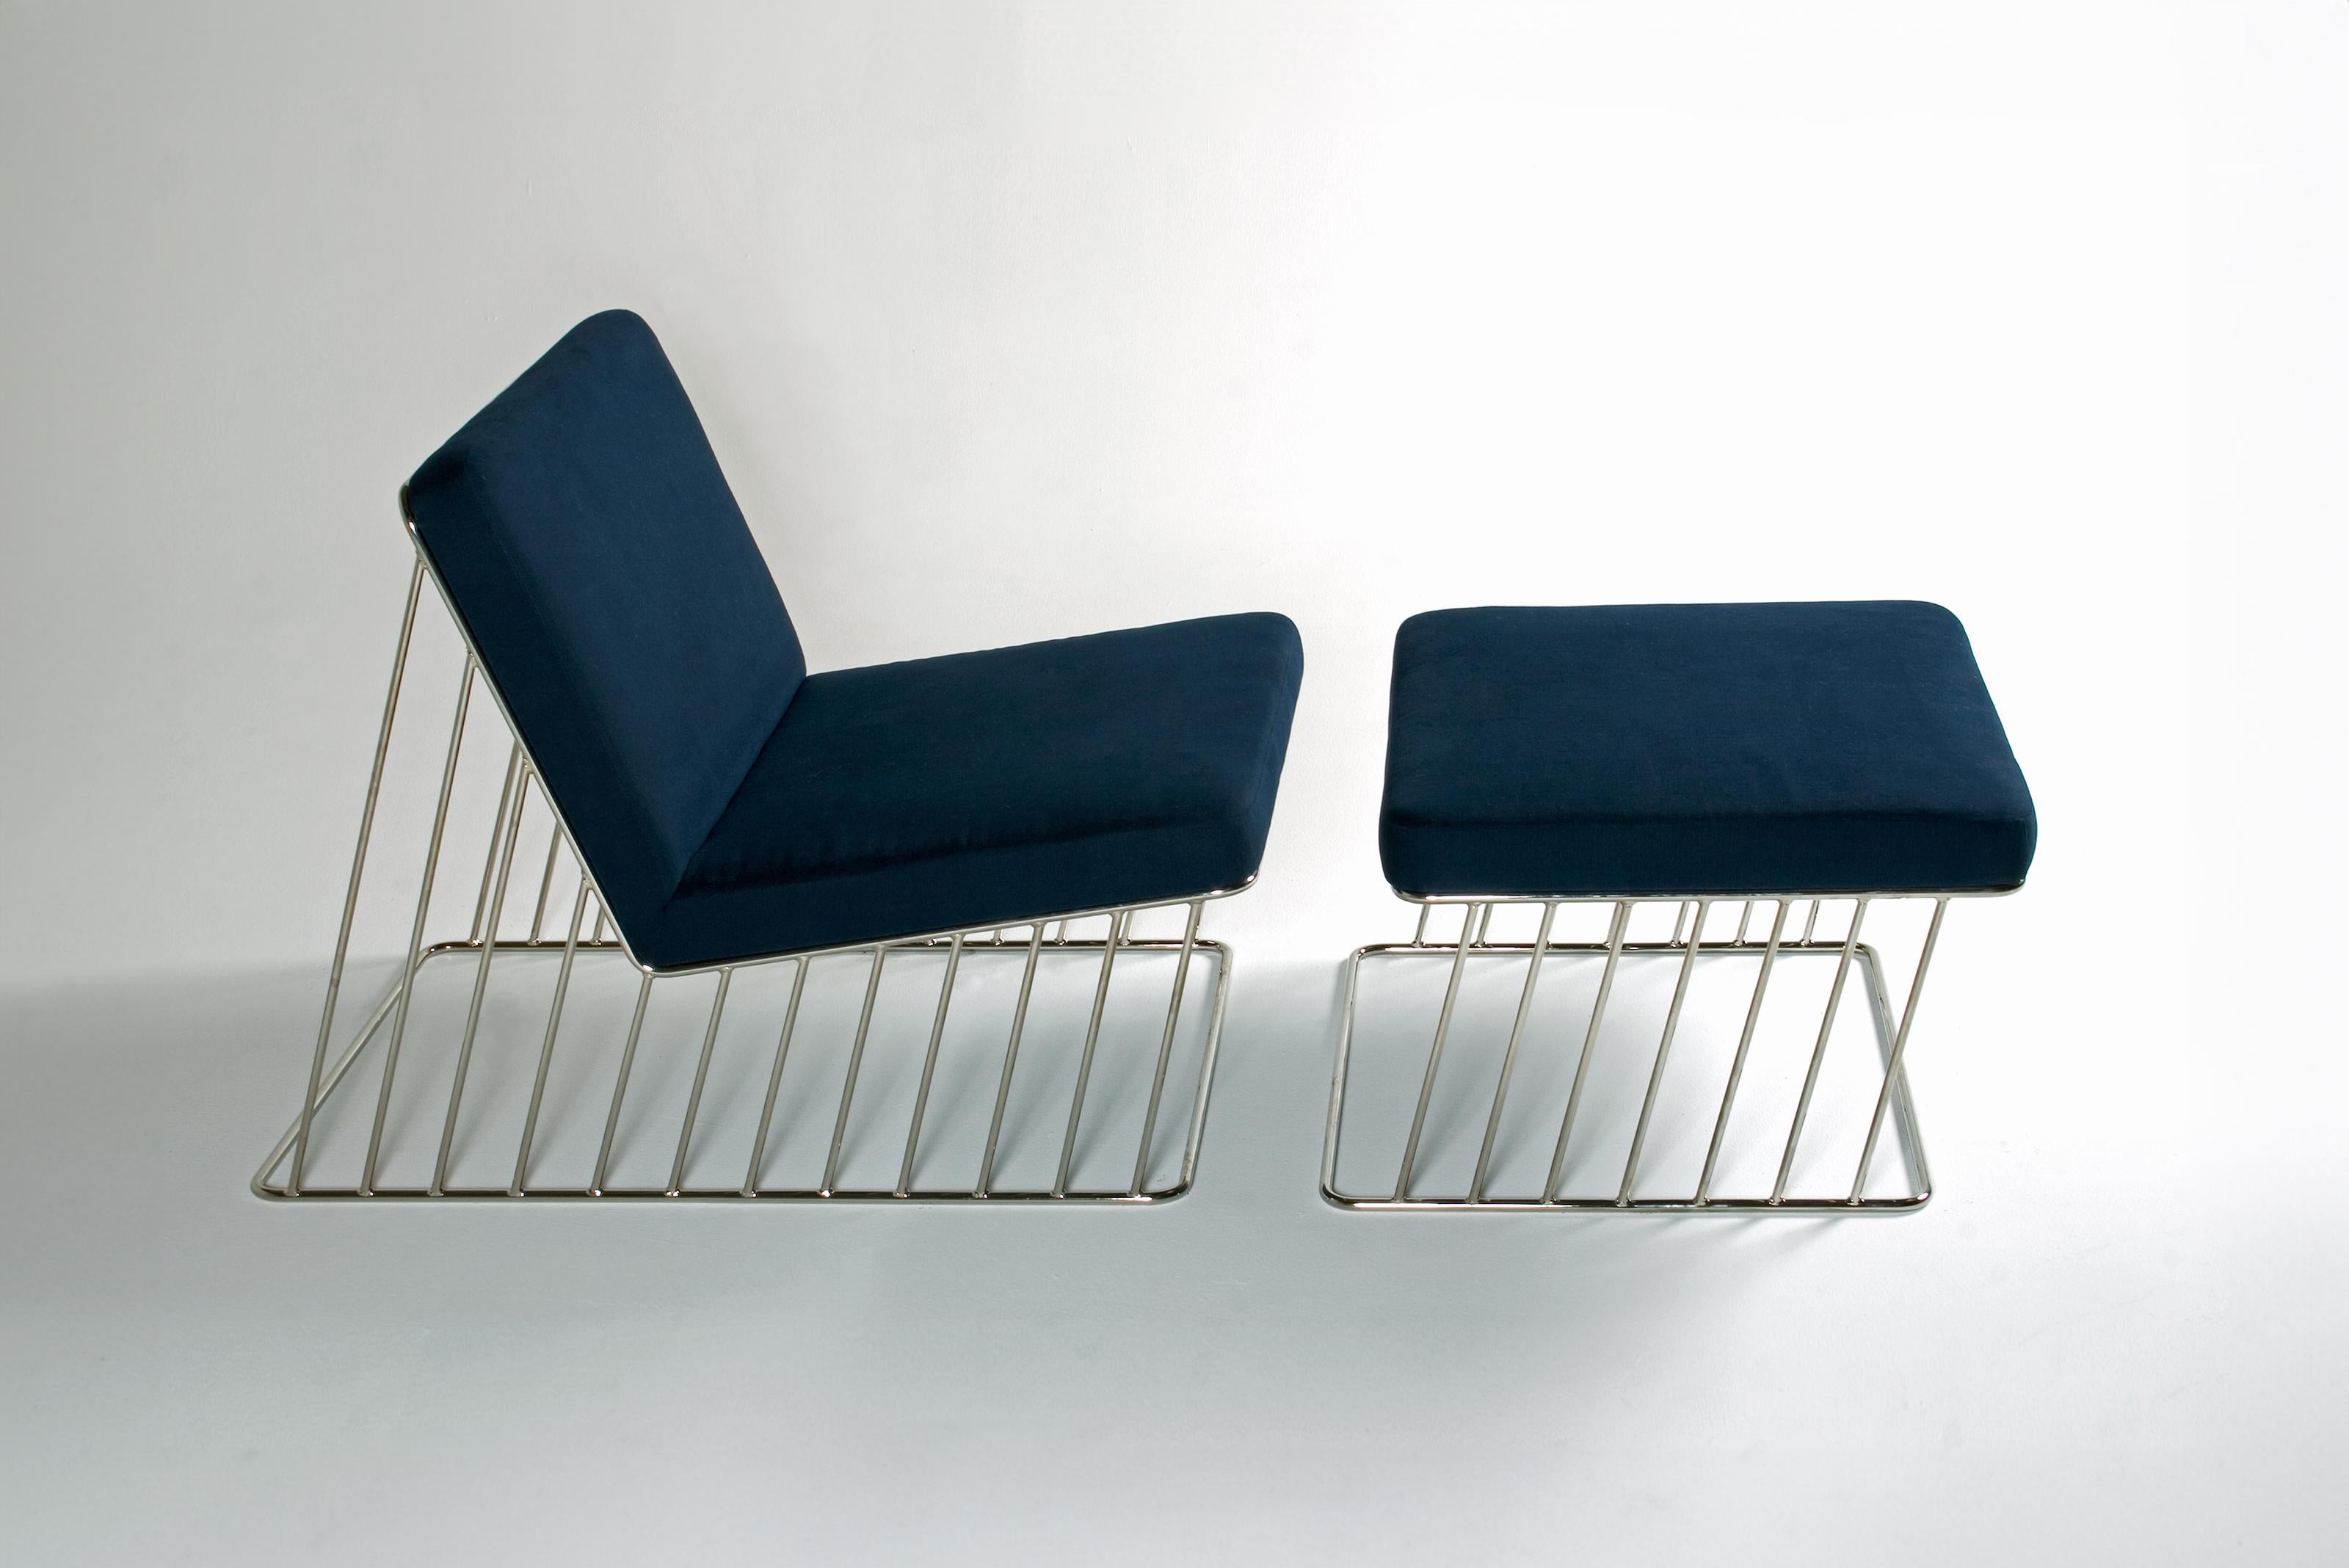 Set Of 2 Wired Italic Lounge Chair And Ottoman Indoor par Phase Design
Dimensions : Chaise longue : D 100,3 x L 64,8 x H 73,7 cm. 
Pouf : P 63,5 x L 64,8 x H 38,1 cm. 
MATERIAL : Tapisserie d'ameublement et chrome poli.

Chaise longue d'intérieur